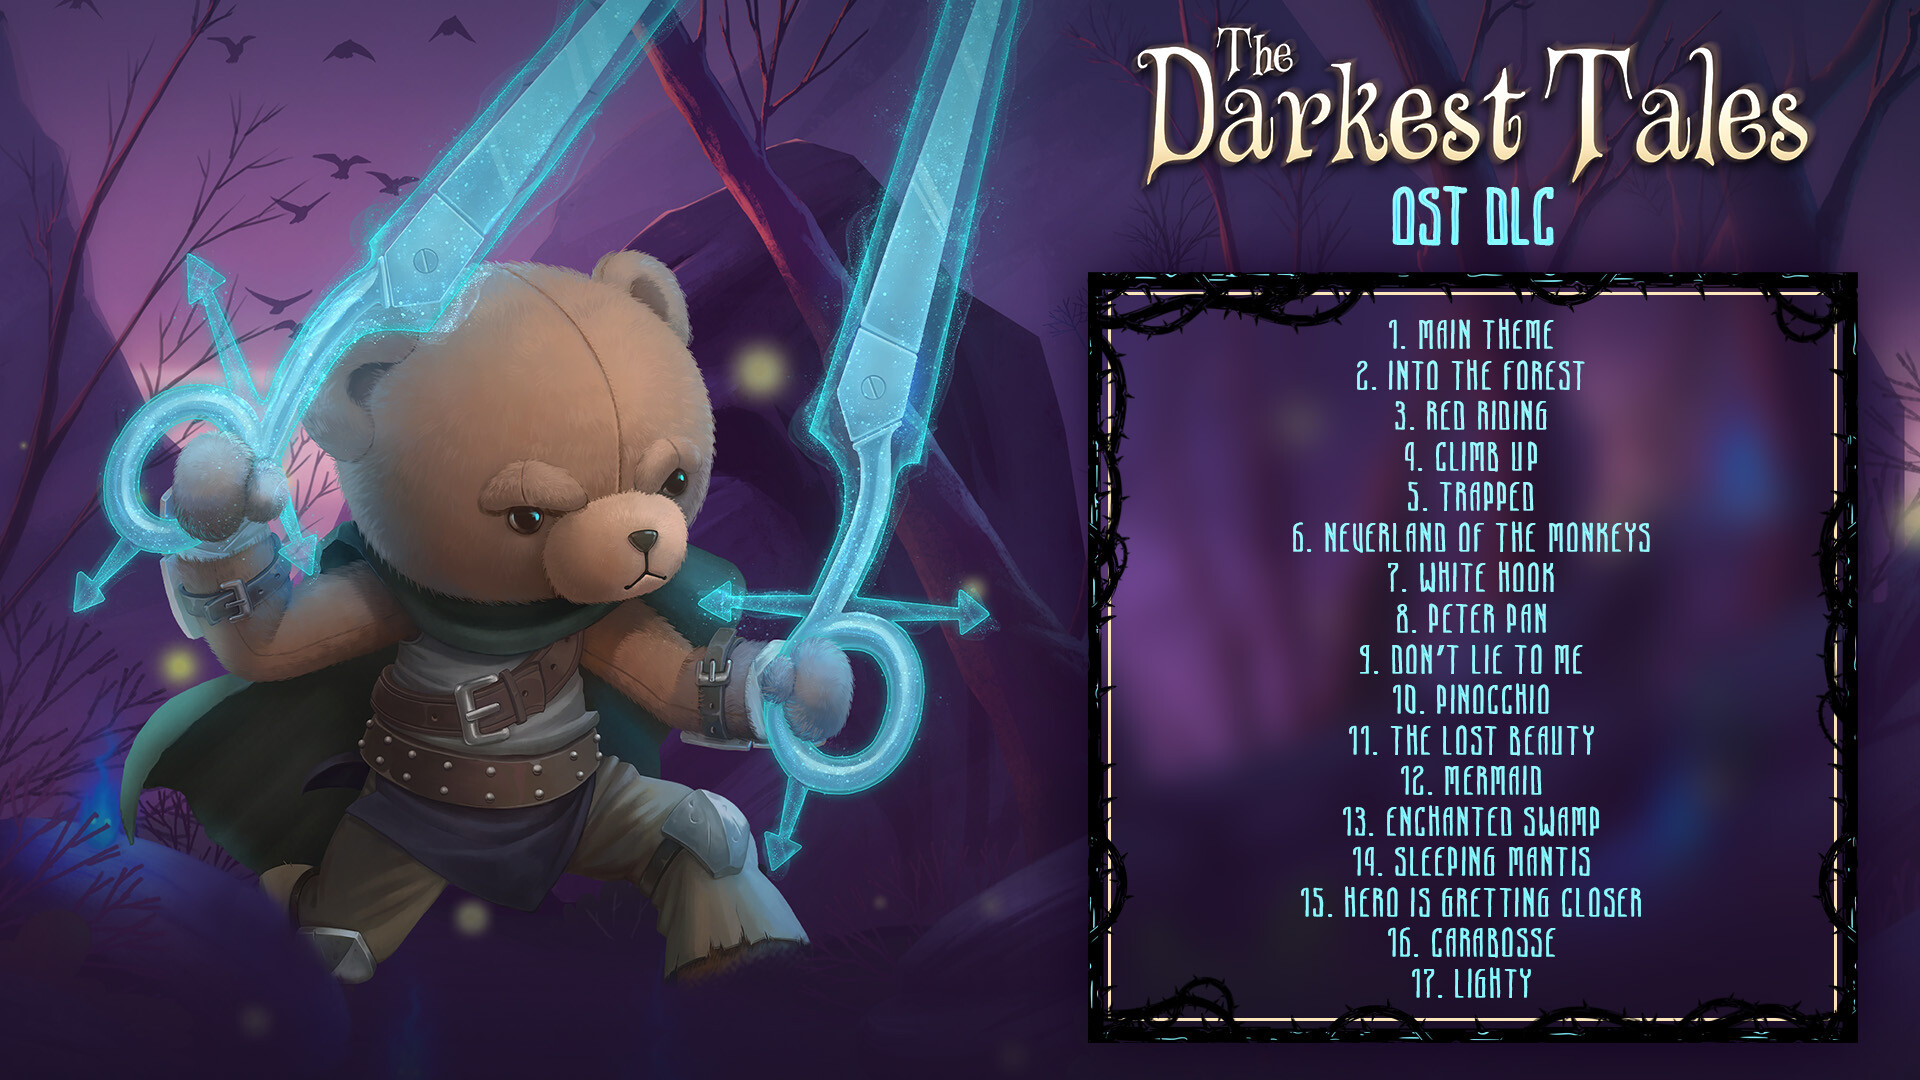 The Darkest Tales — OST DLC Featured Screenshot #1